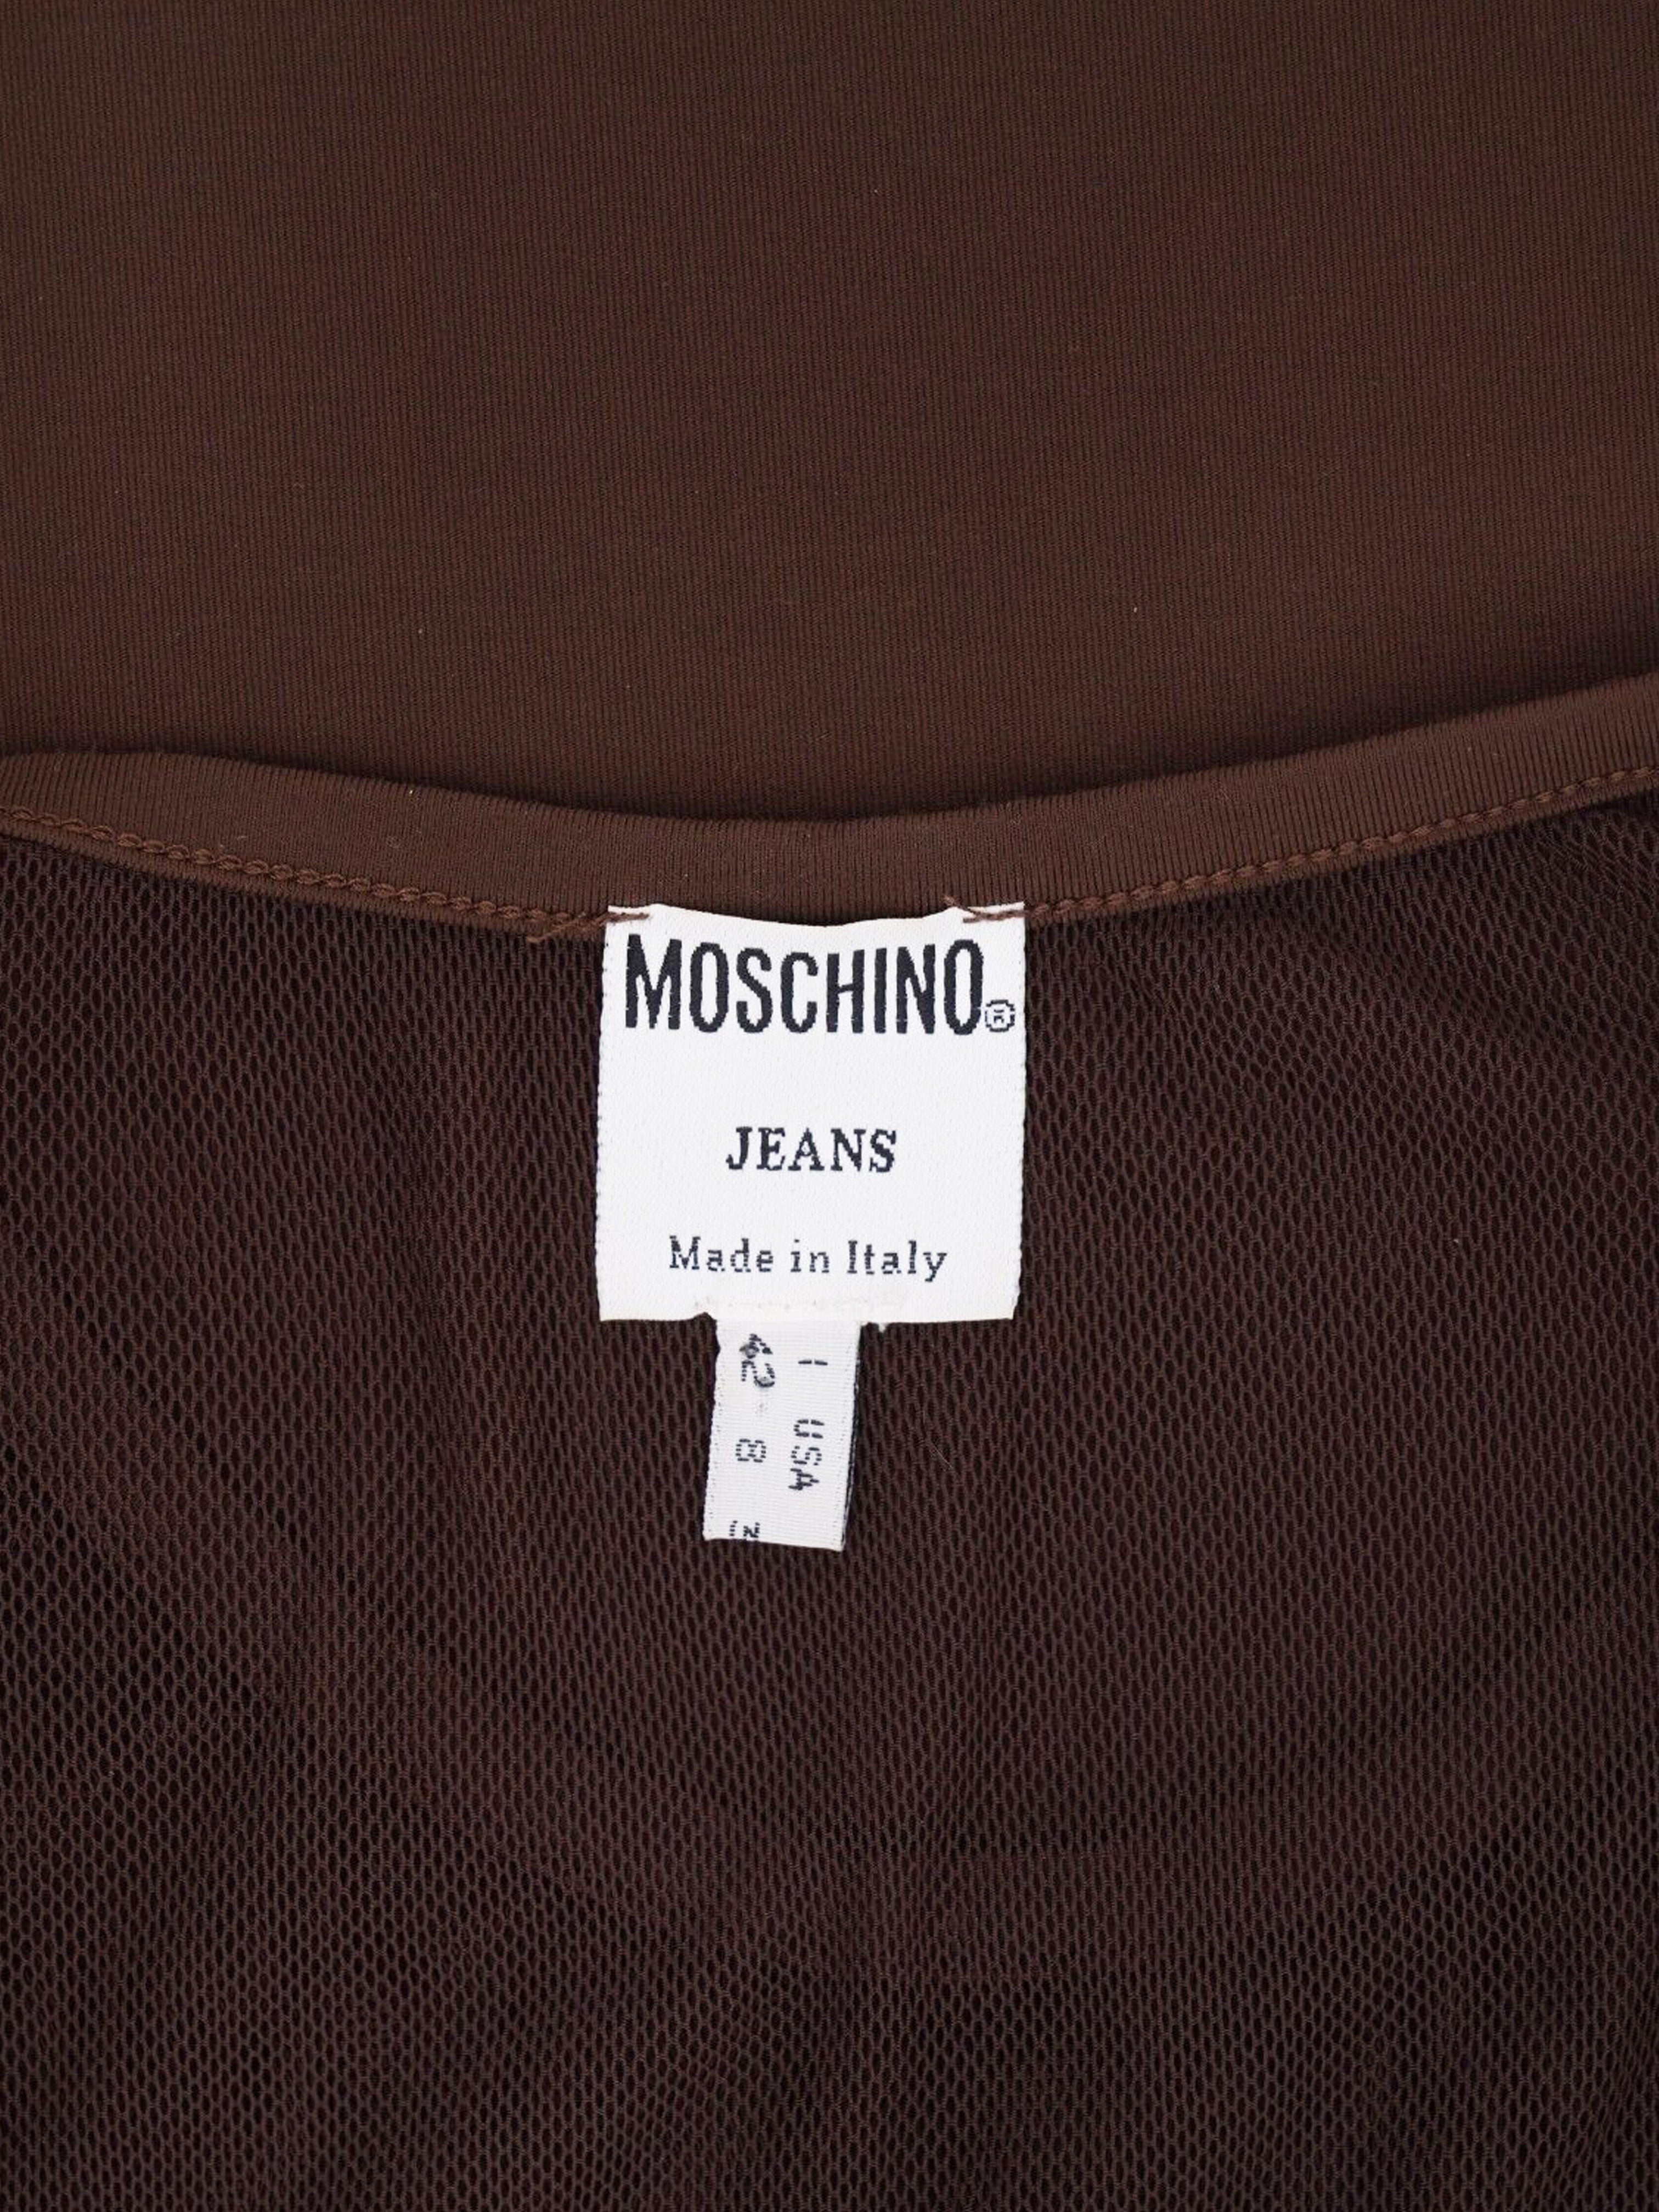 Moschino Jeans 1990s Brown Mesh Trim Bodycon Dress